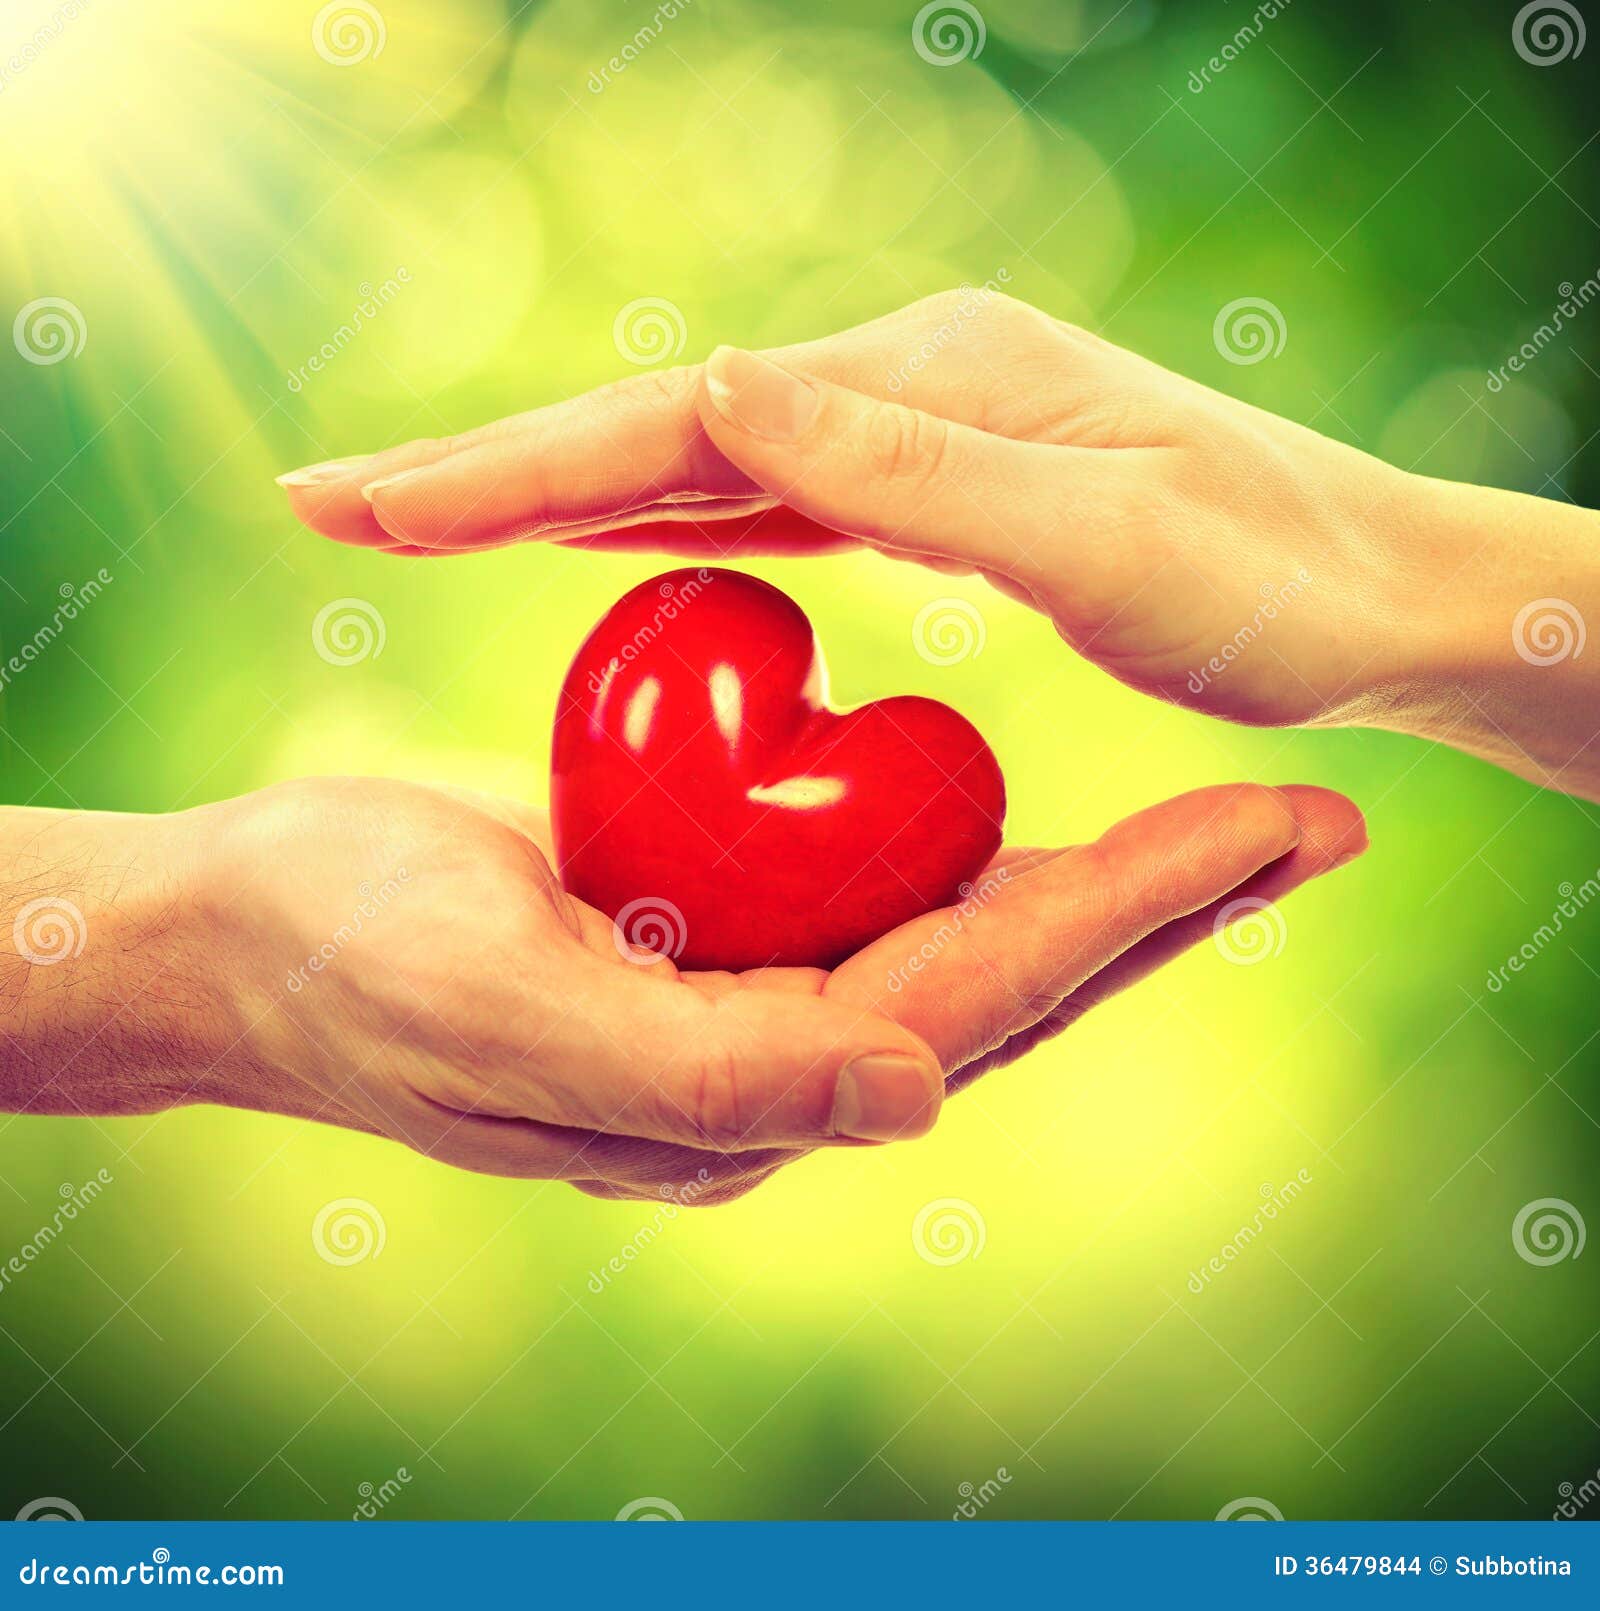 Valentine Heart stock photo. Image of girl, finger, background ...